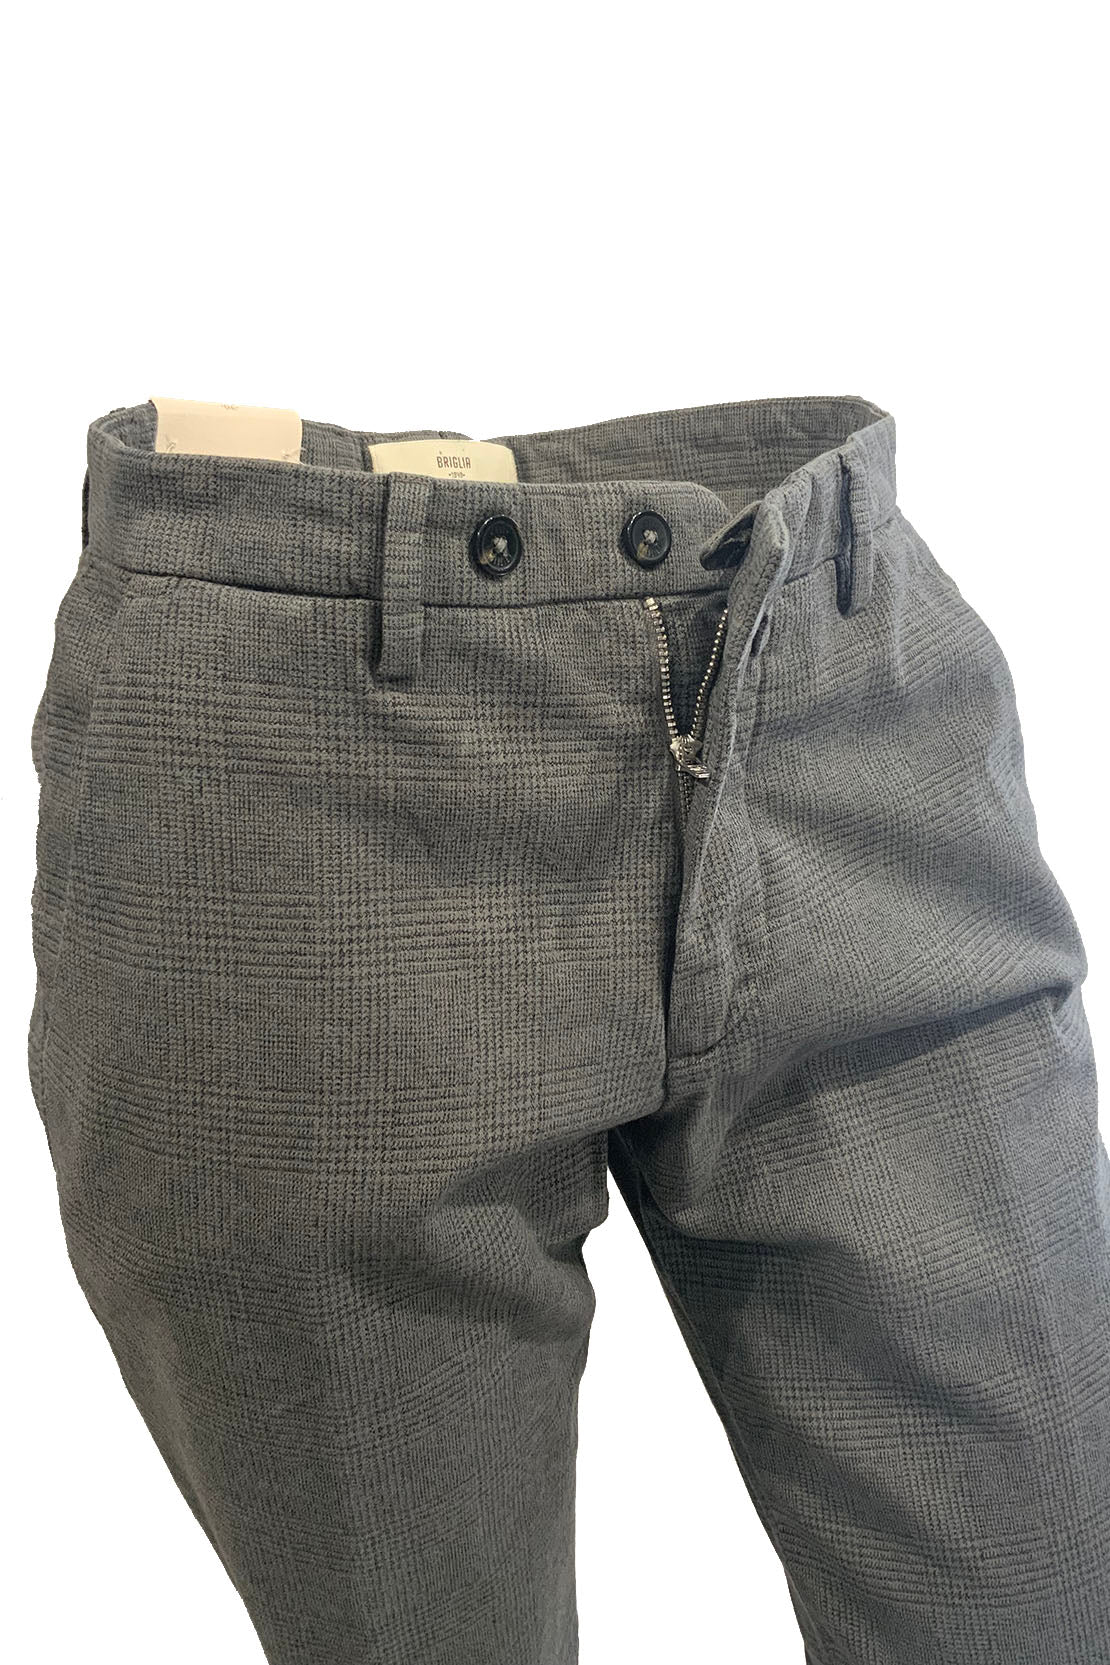 BRIGLIA 1949 - Grey Check Slim Fit Cotton Stretch Chinos BG03 423132